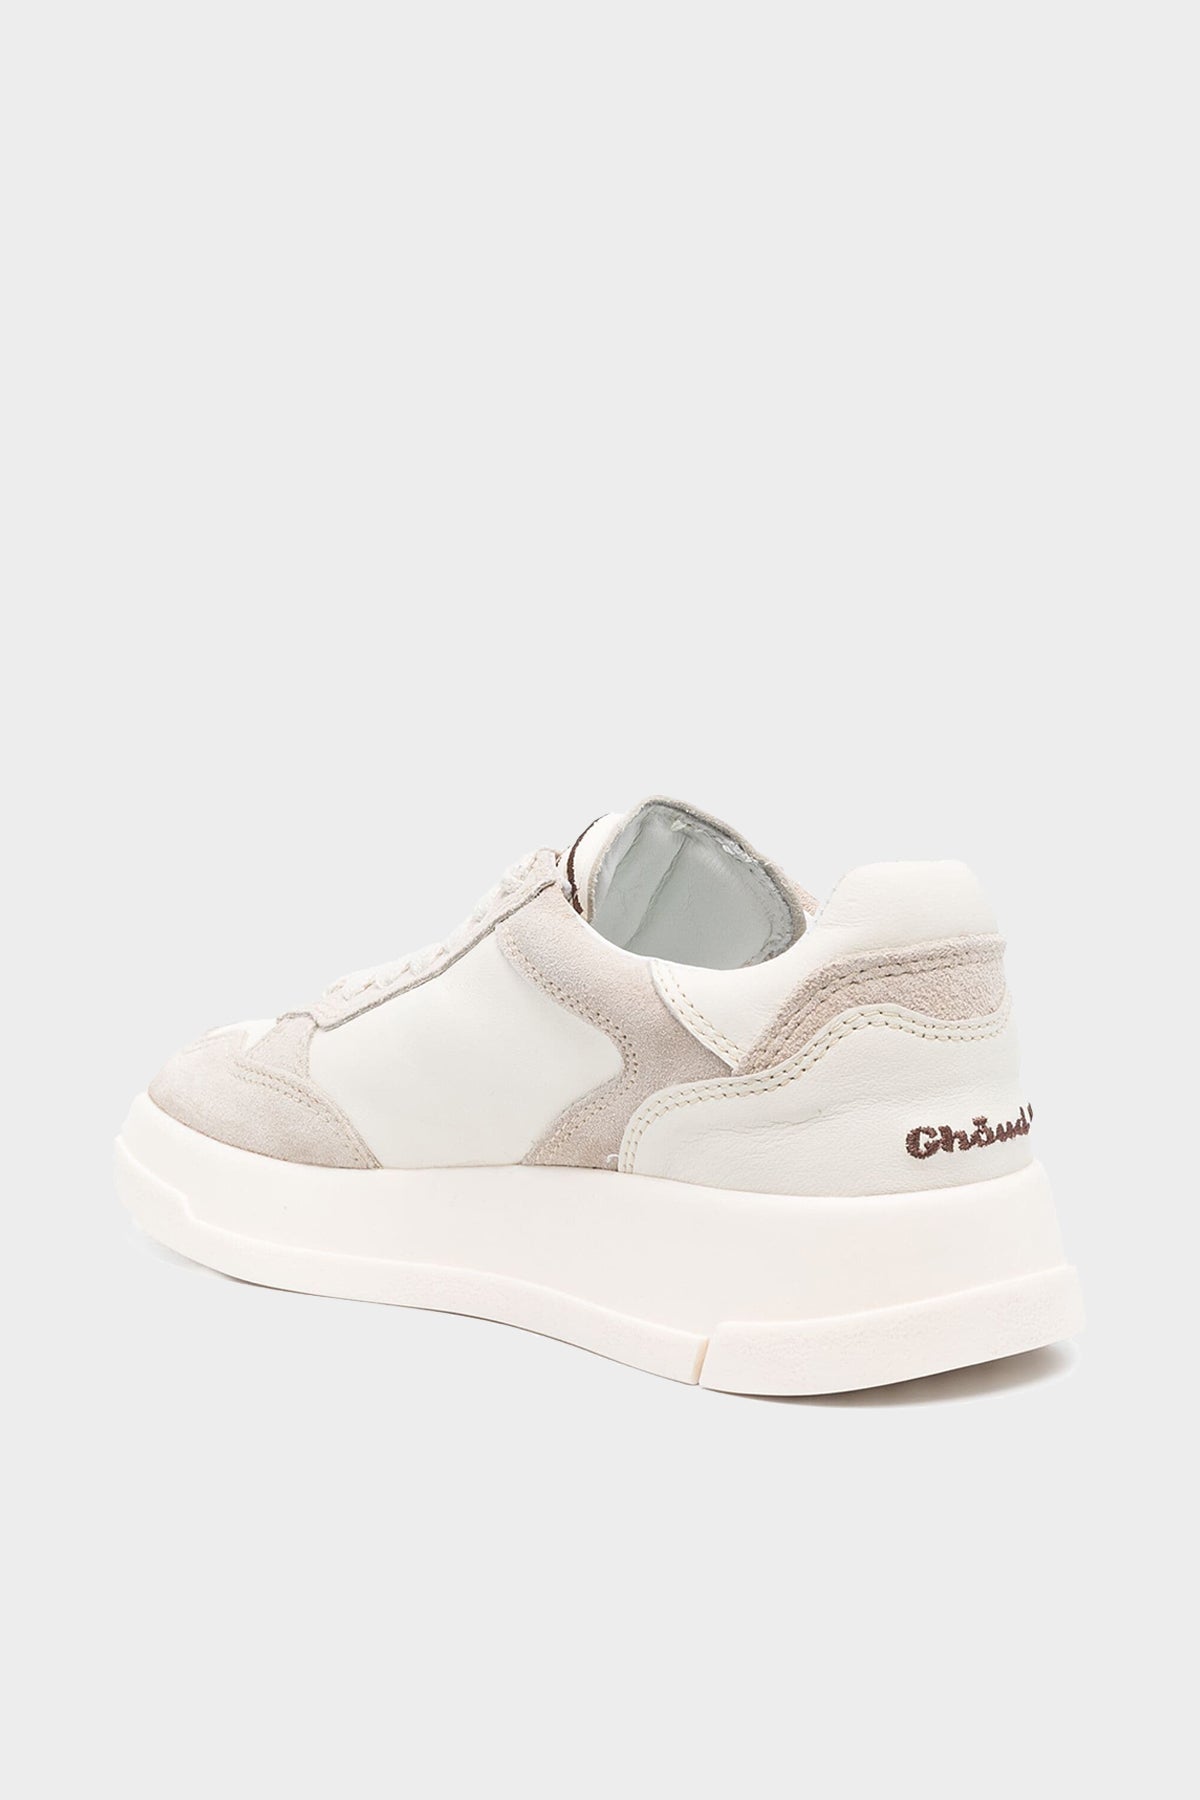 Tweener Leather & Suede Sneakers in Neutral - shop-olivia.com